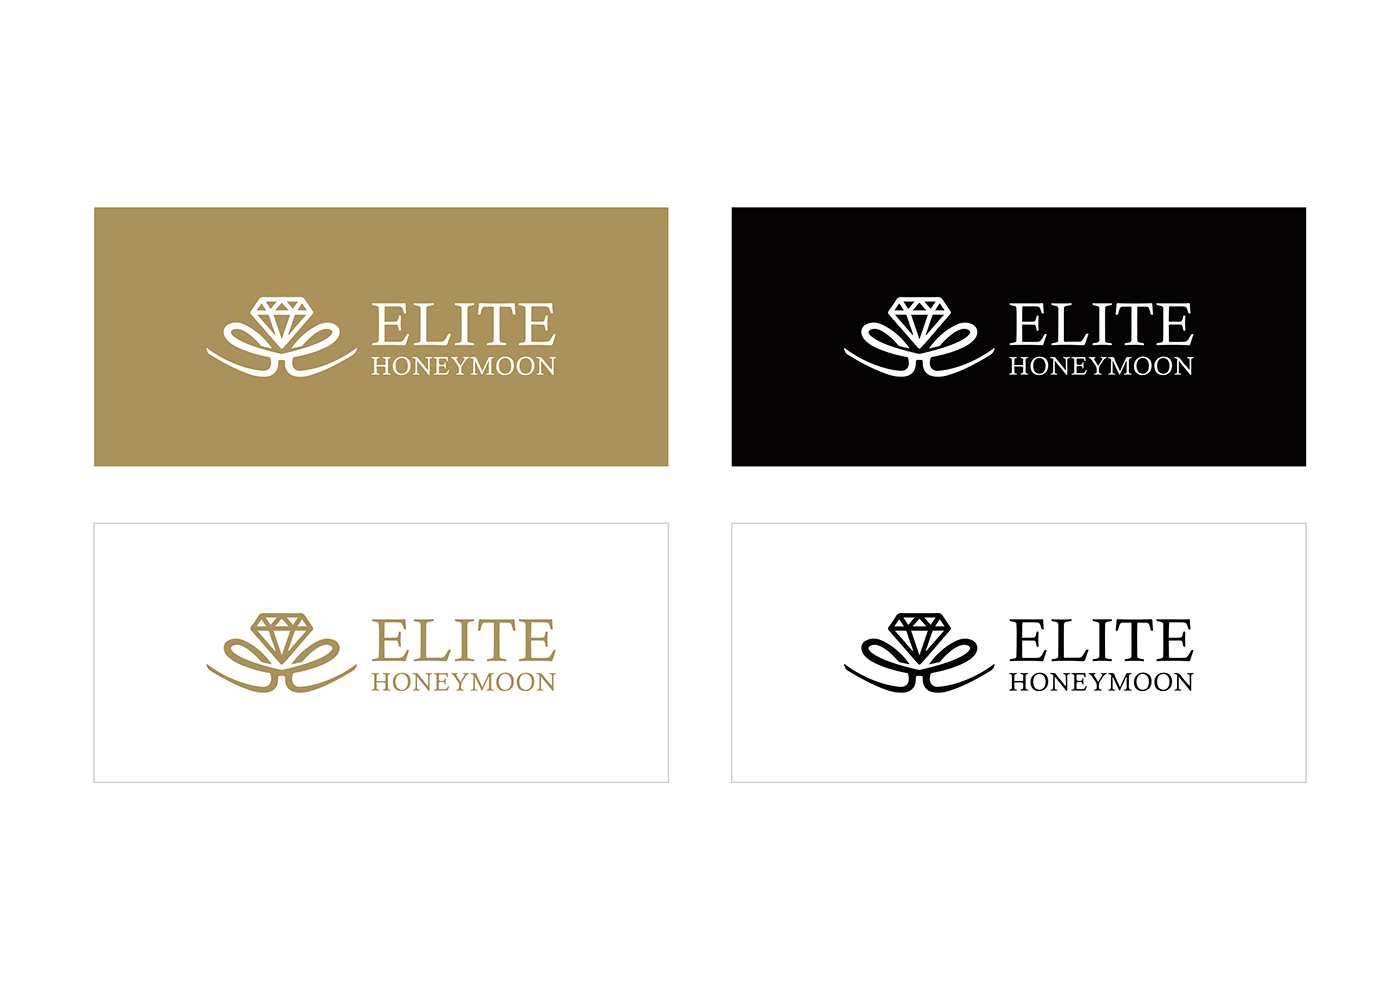 elite honeymoon elite logo elite honeymoon logo honeymoon logo